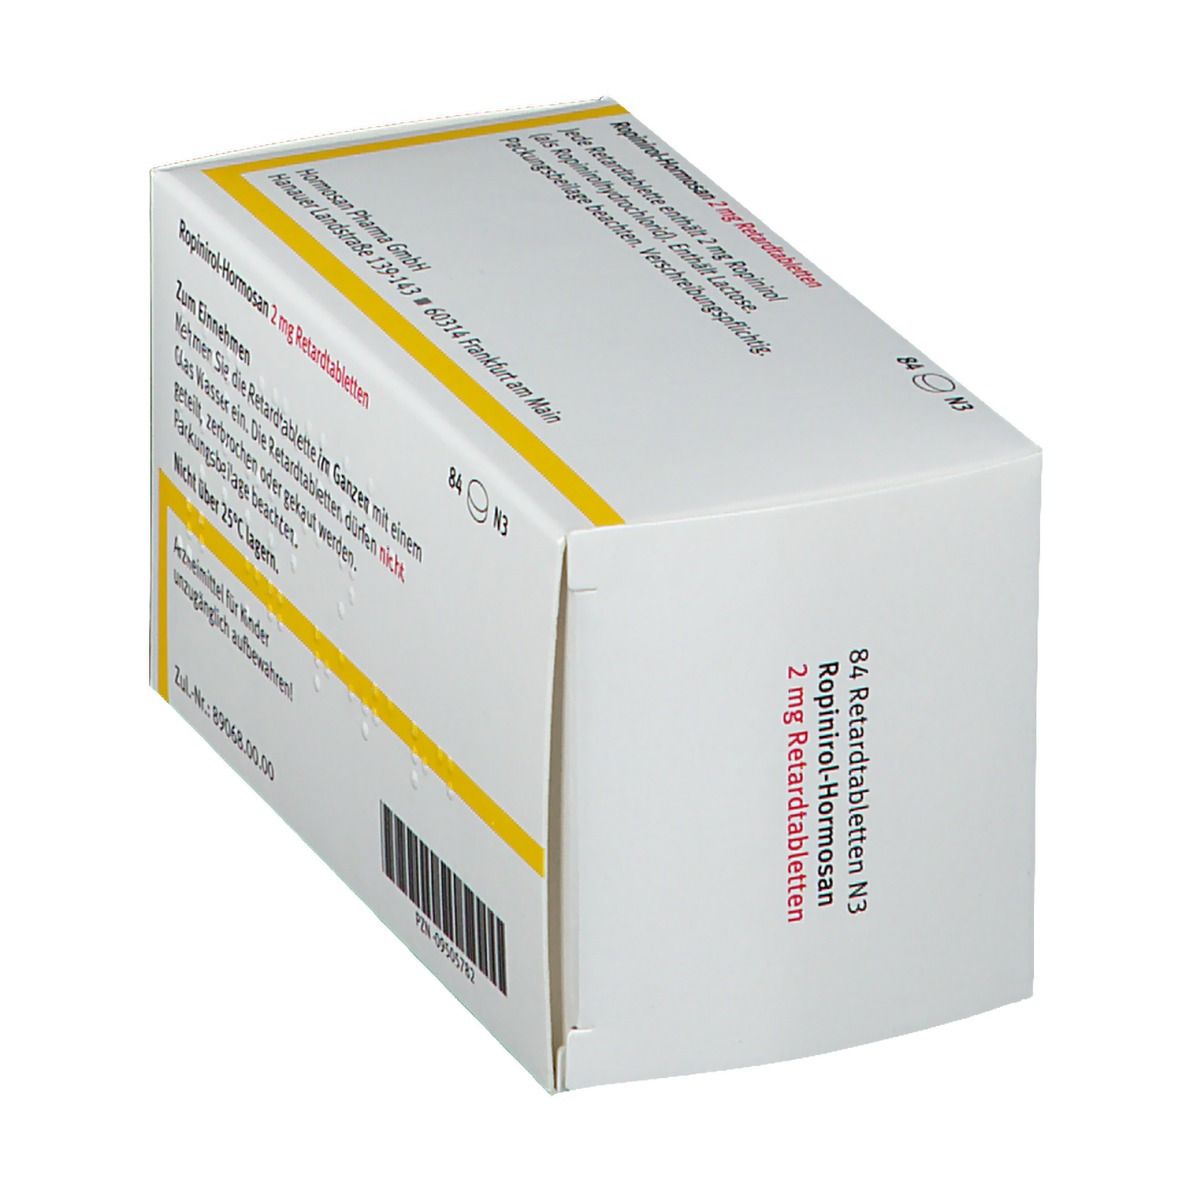 Ropinirol-Hormosan 2 mg